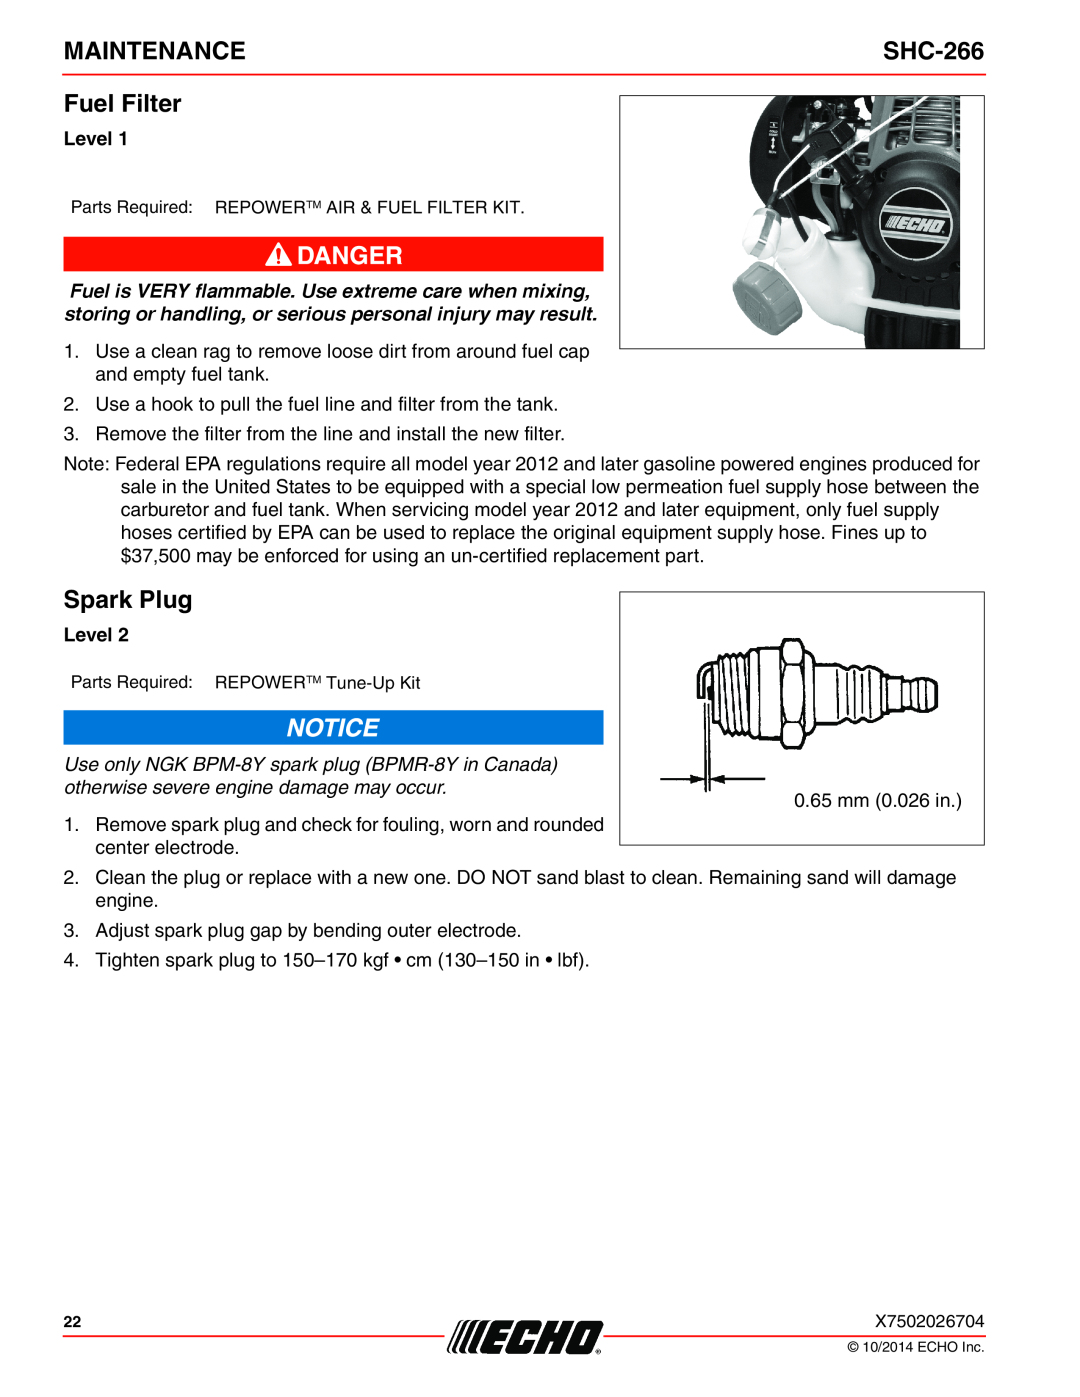 Echo X772000164, X7722271404 specifications Fuel Filter, Spark Plug, Maintenance, SHC-266 